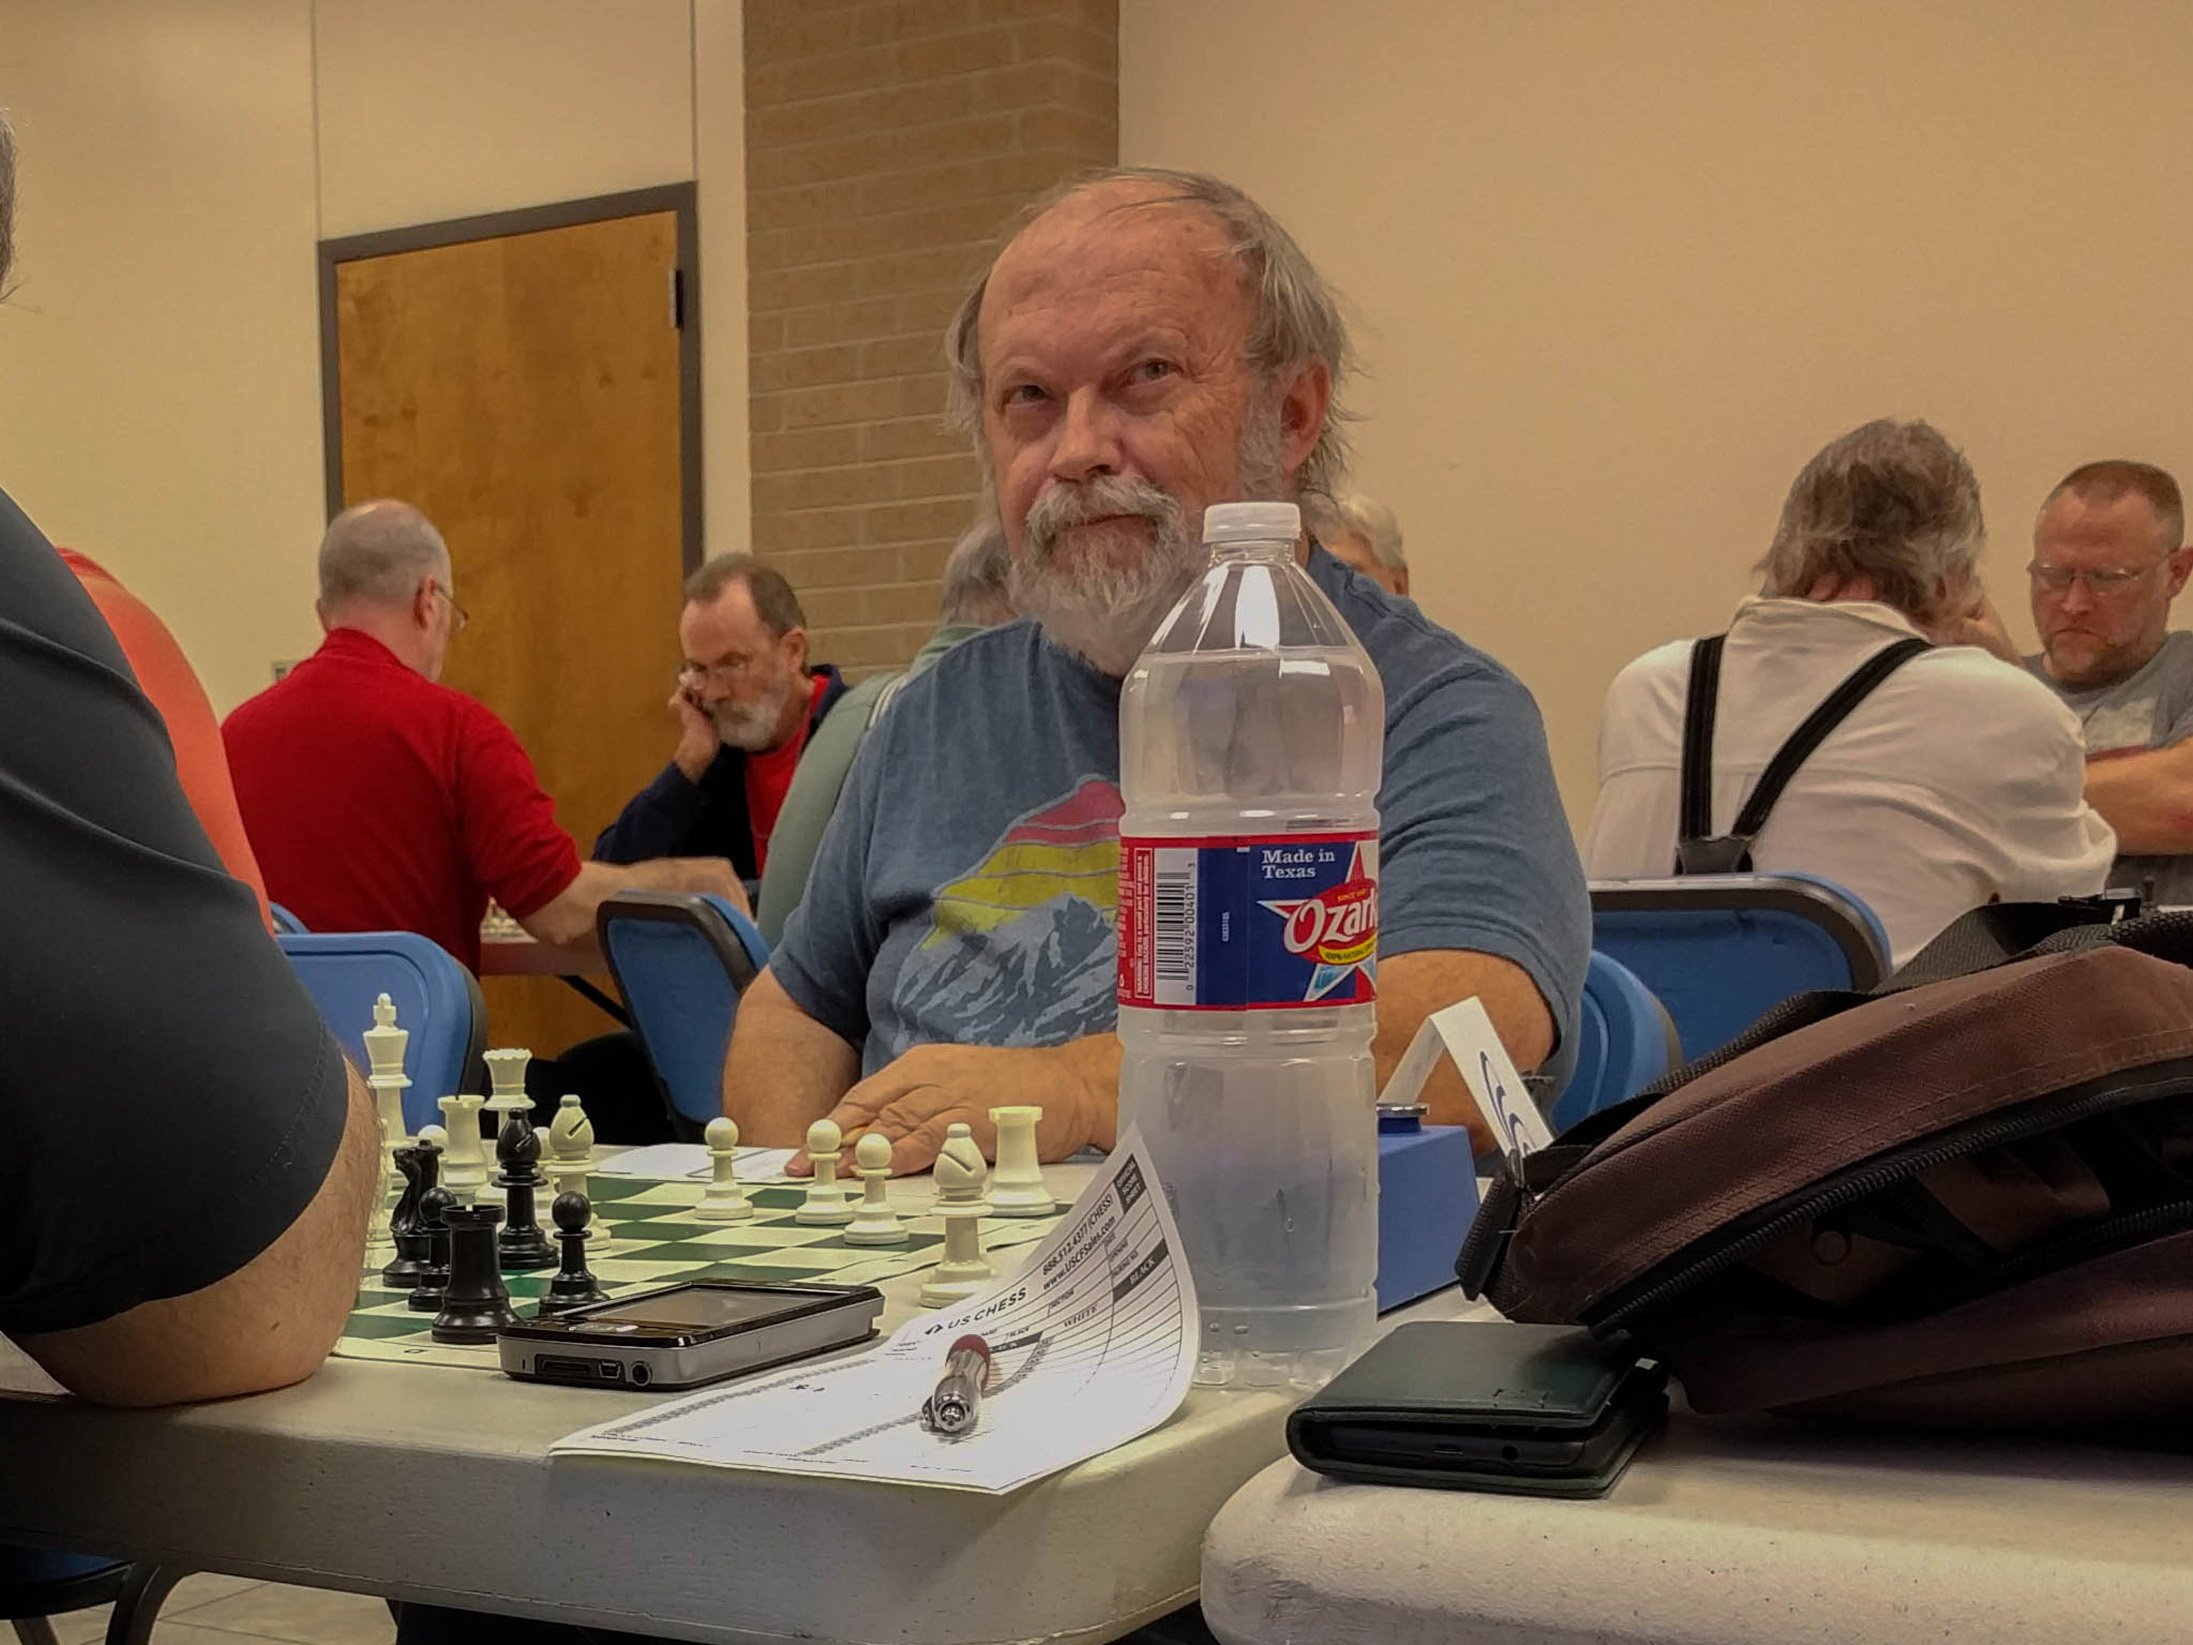 John De Vries, Team Captain, Waco Chess Team